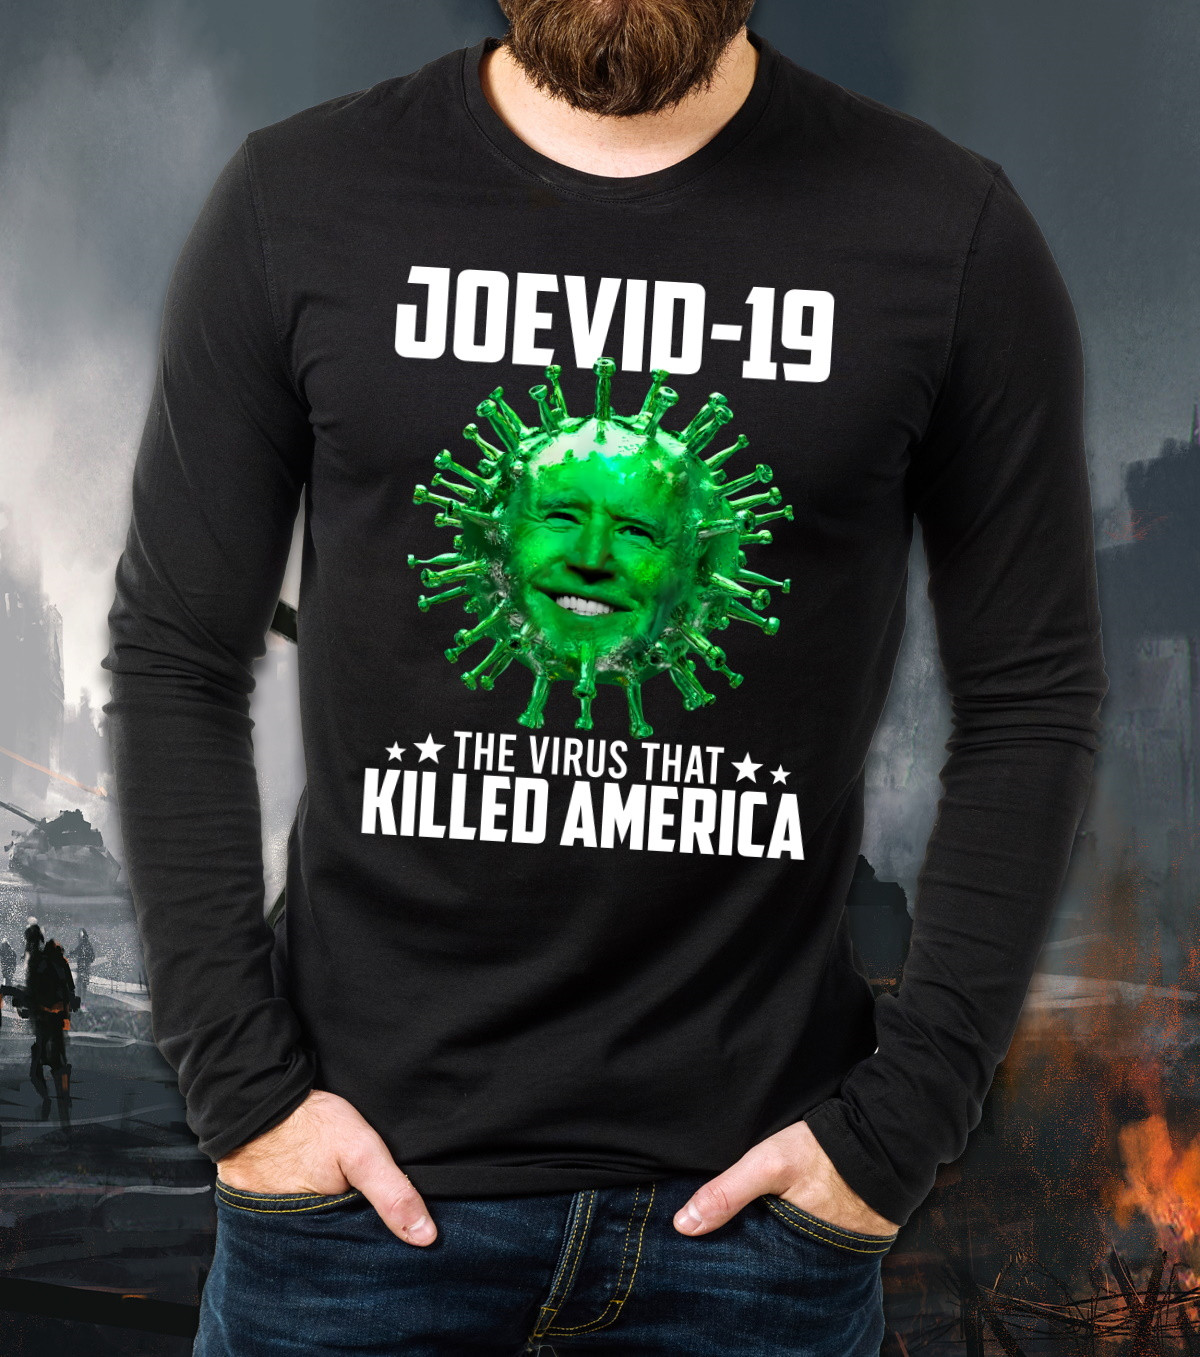 Joevid-19, The Virus That Killed America Long Sleeve Shirt